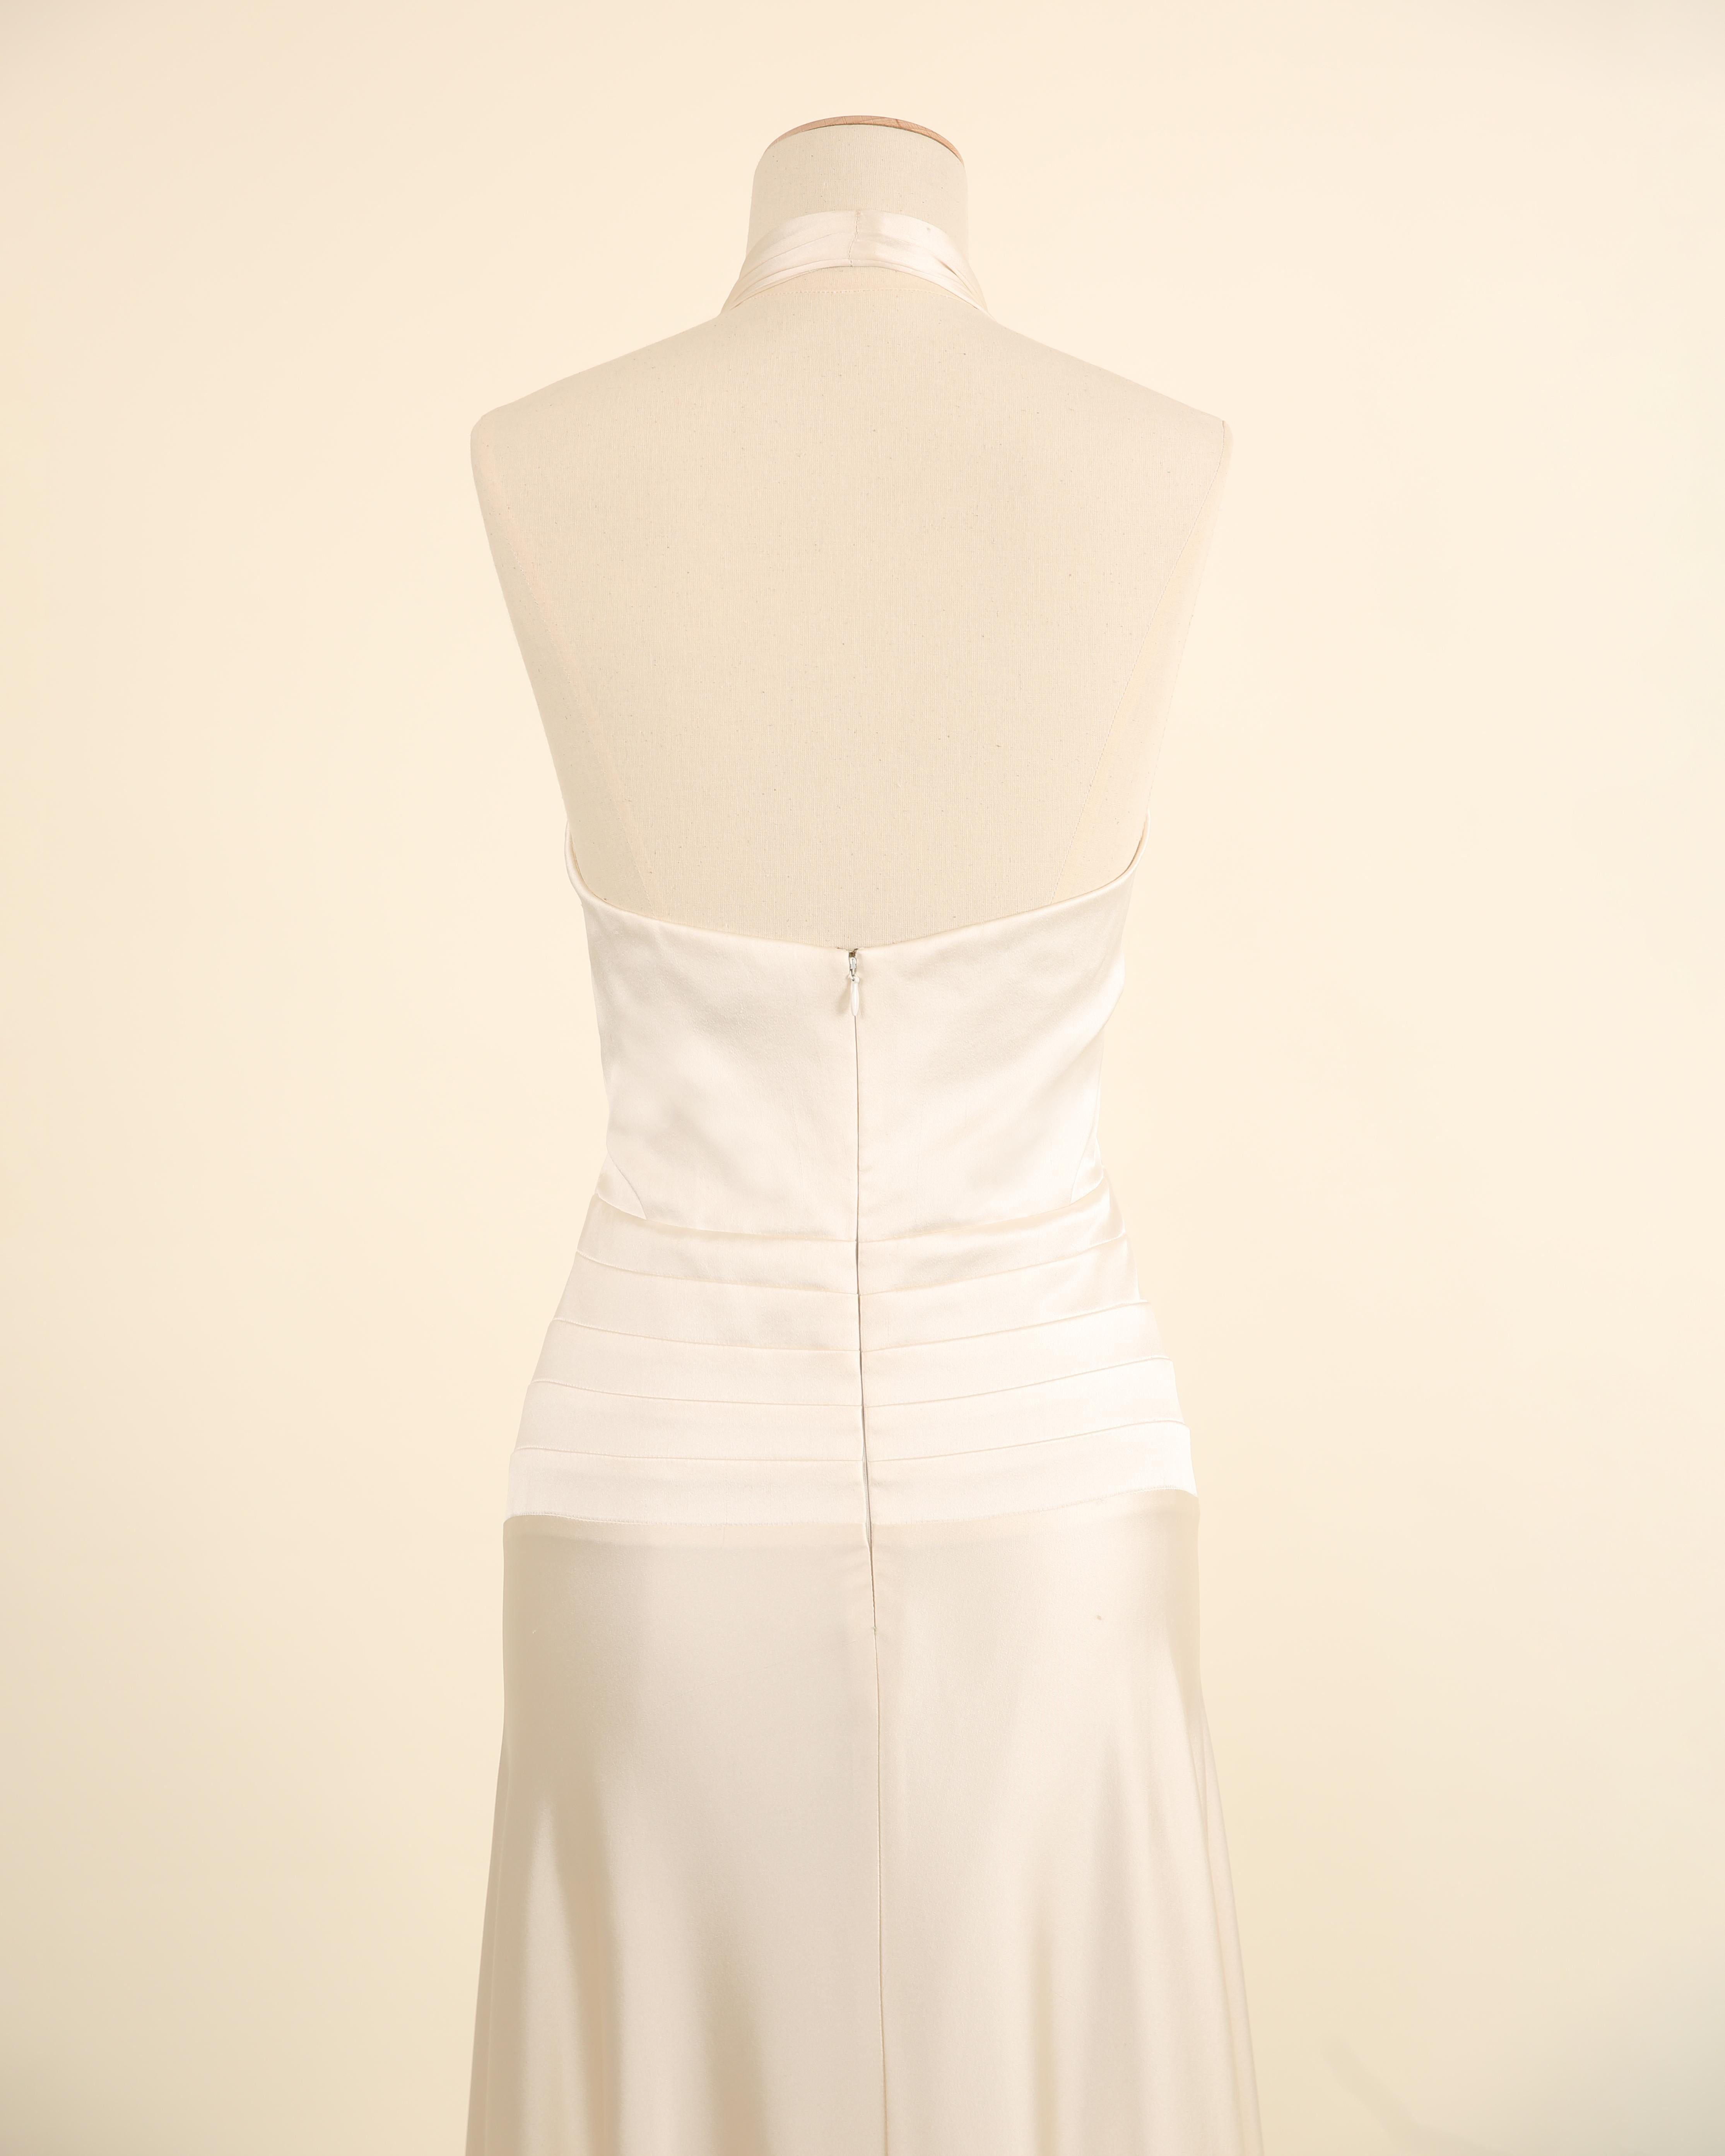 Ralph Lauren S/S 2009 white ivory silk plunging halter neck wedding gown dress For Sale 3